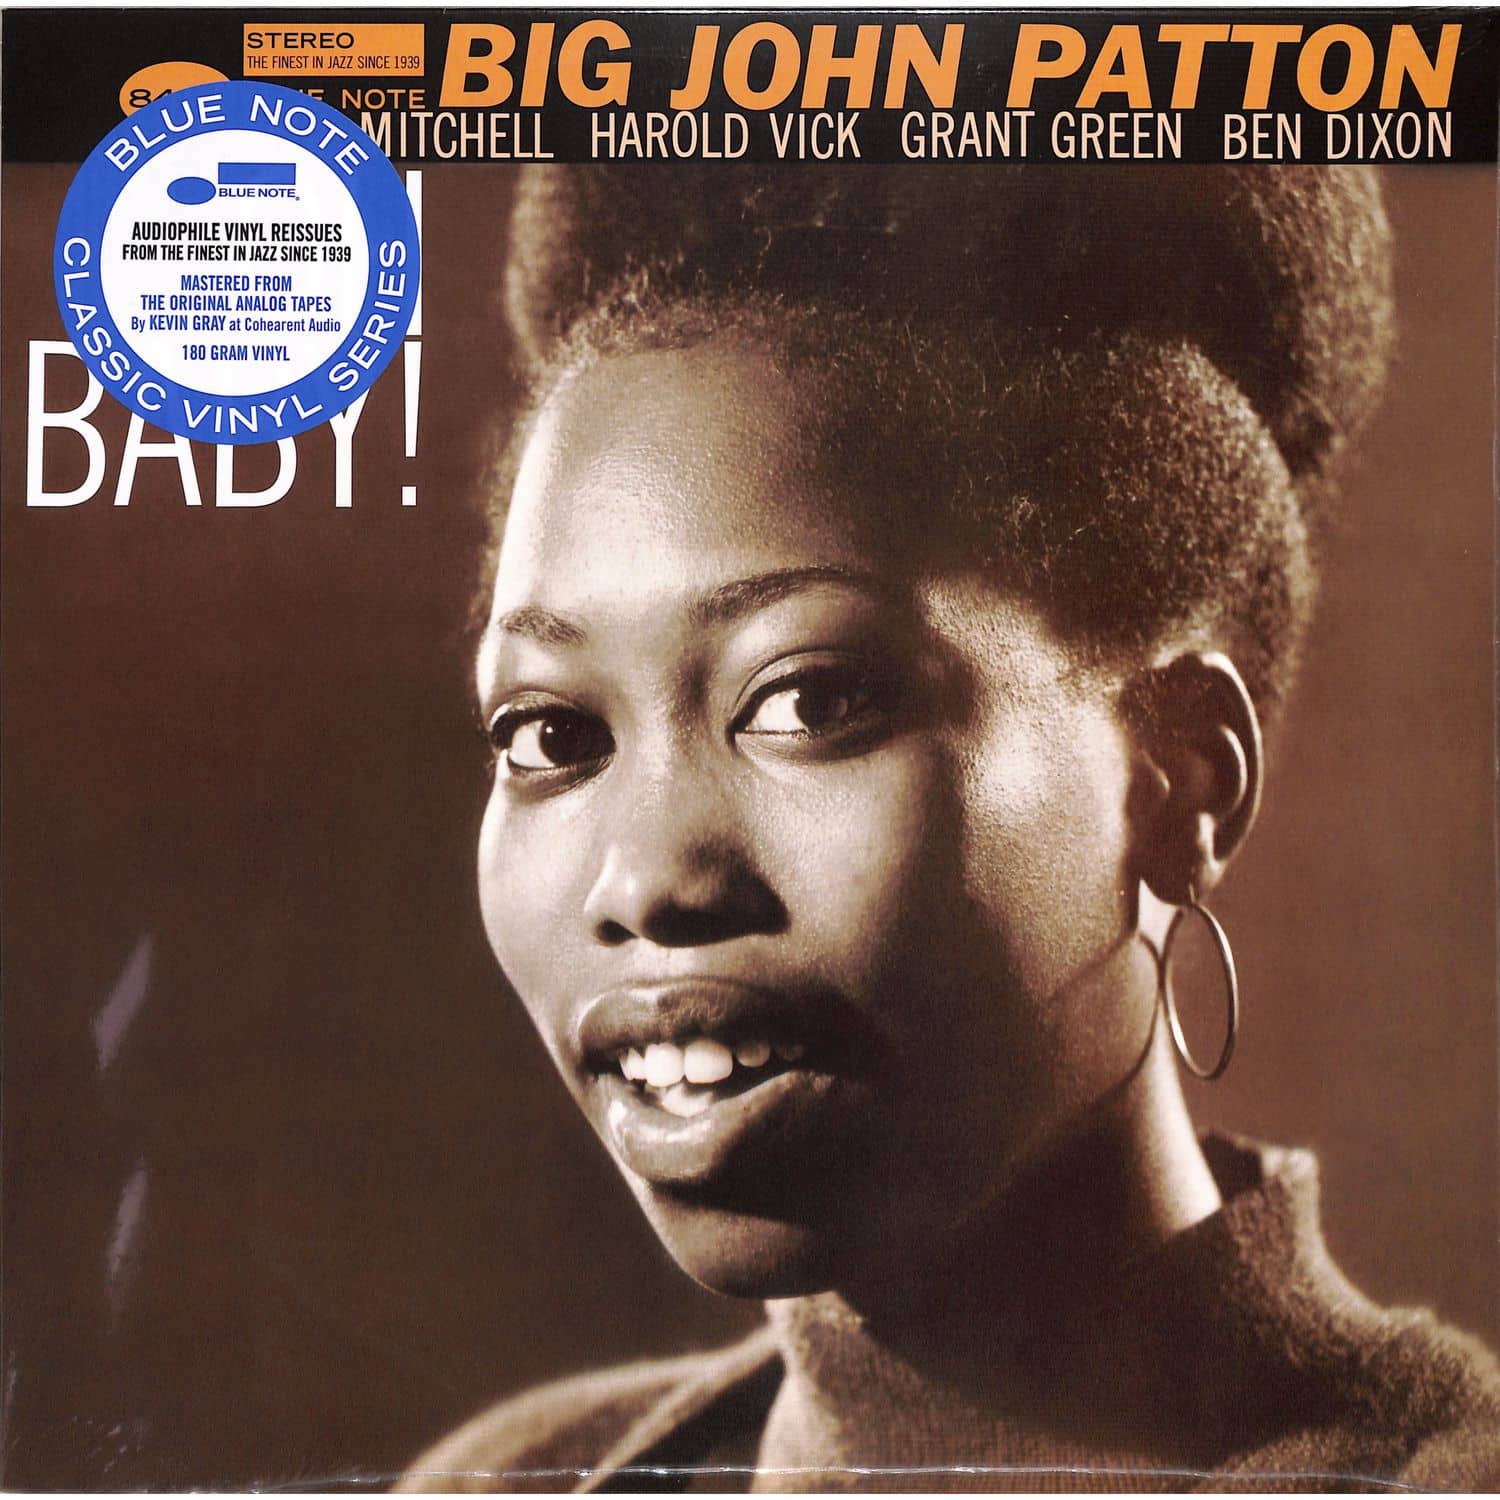 Big John Patton - OH BABY! 